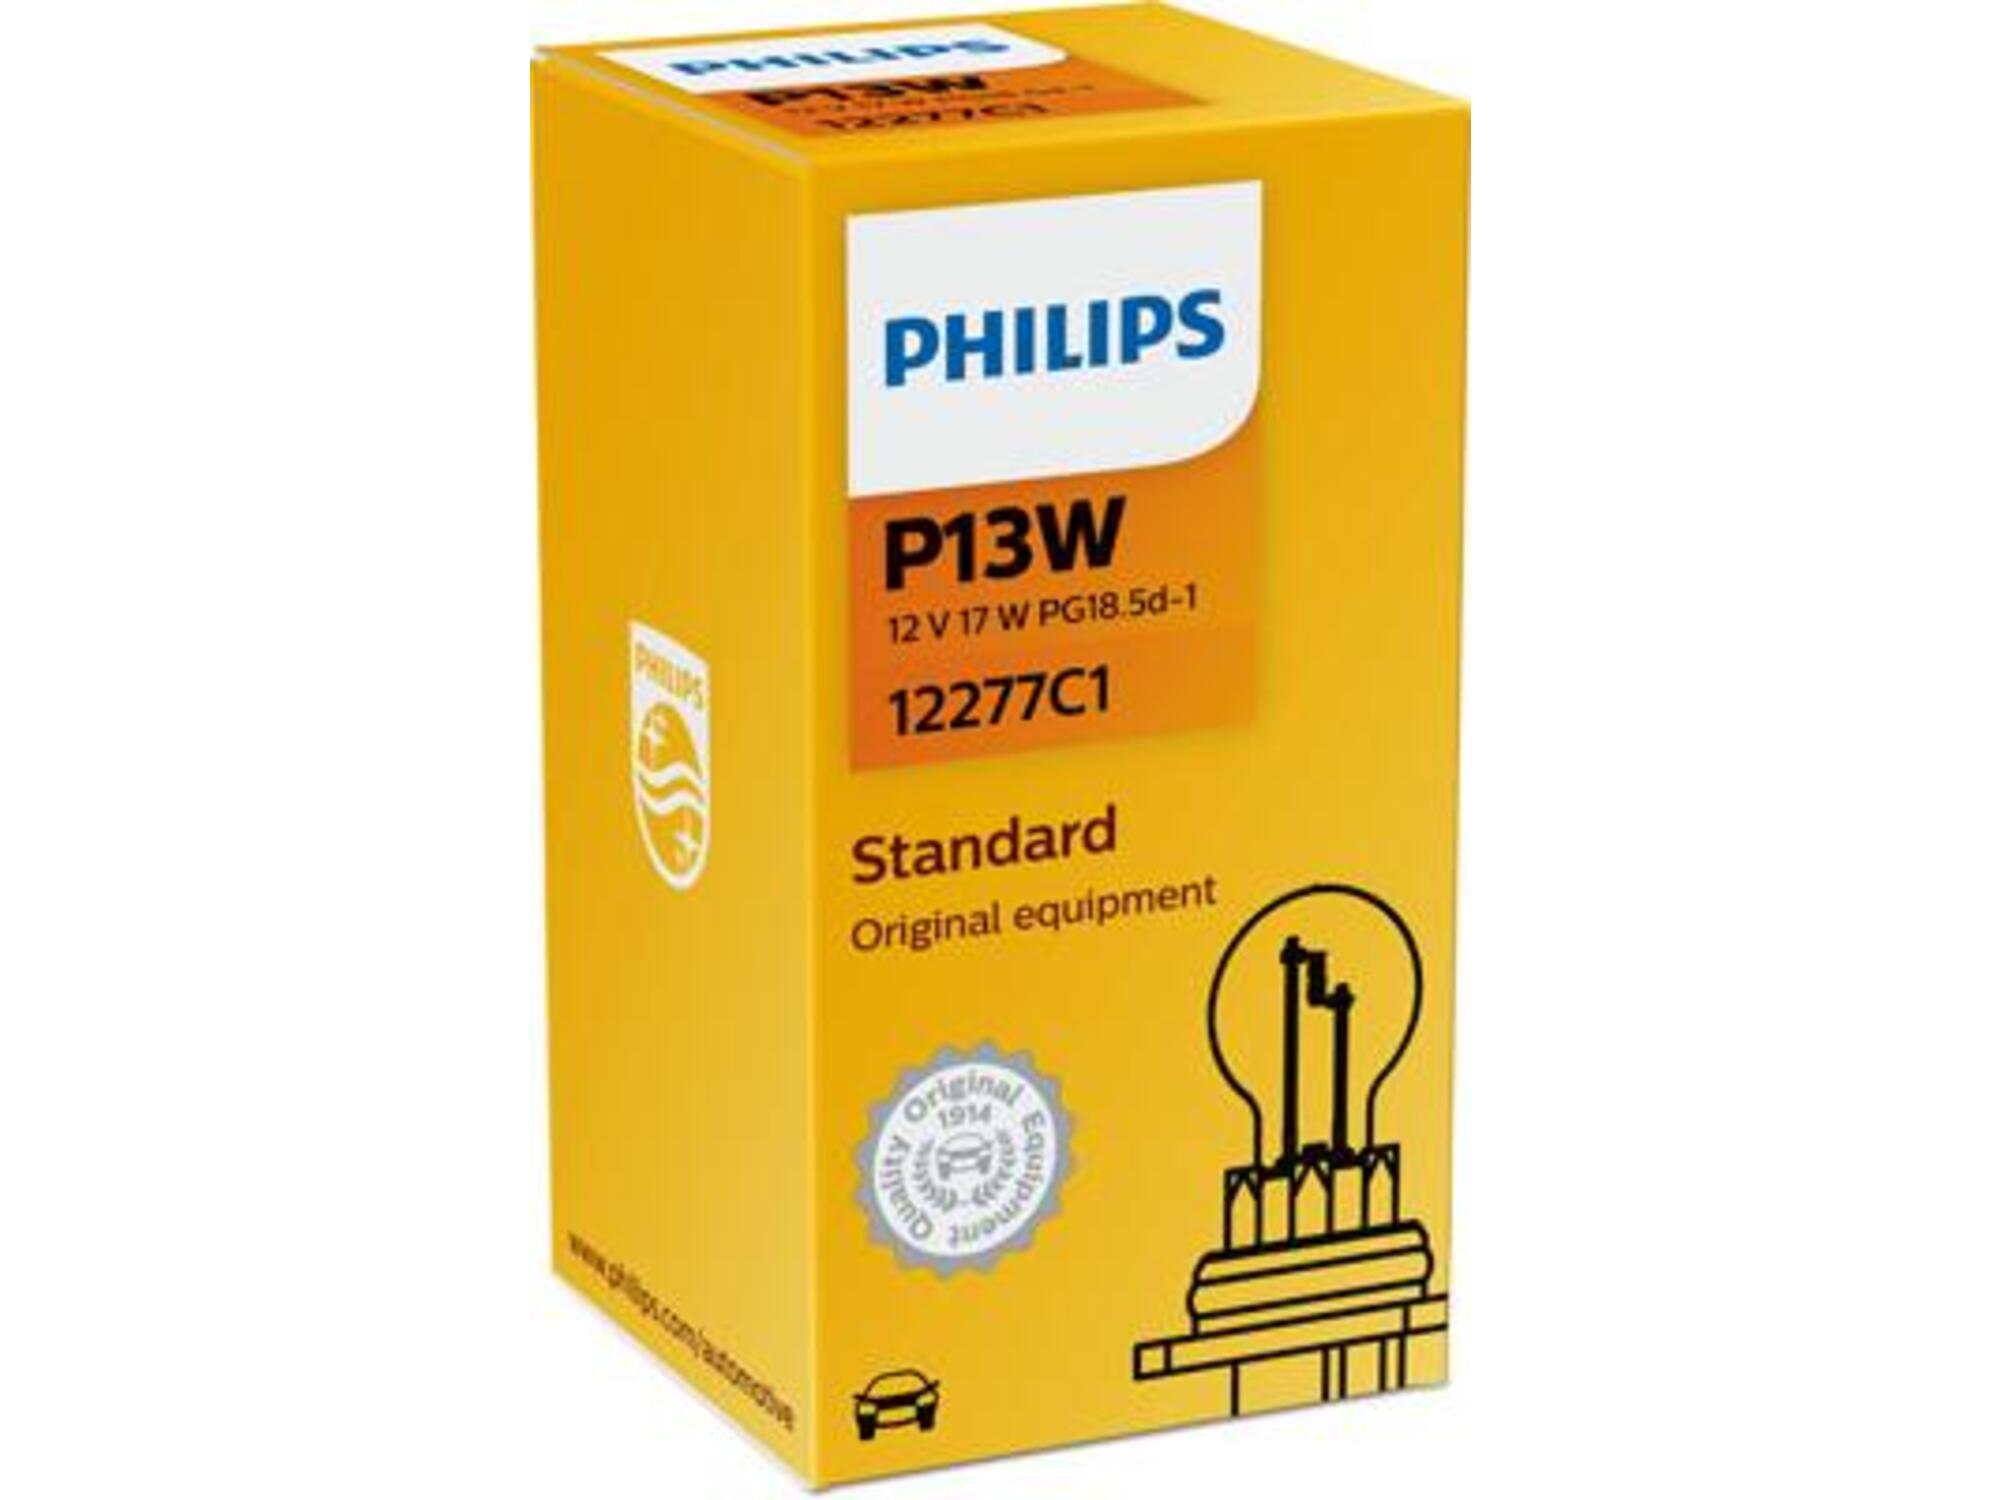 PHILIPS Žarnica Philips P13W 12V 12277C1 13W PG18.5d-1 C1